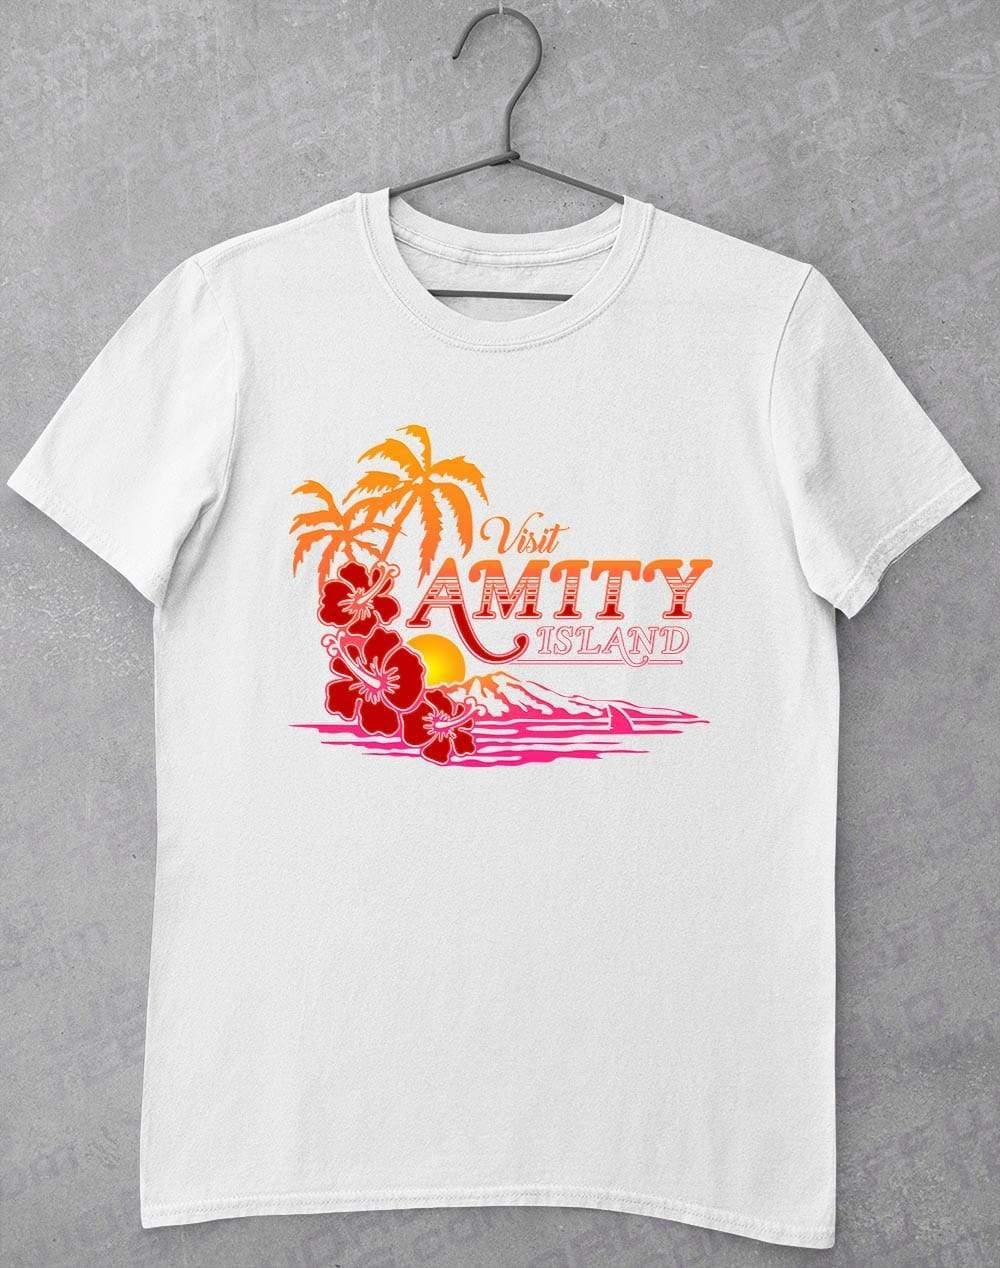 Visit Amity Island T-Shirt S / White  - Off World Tees